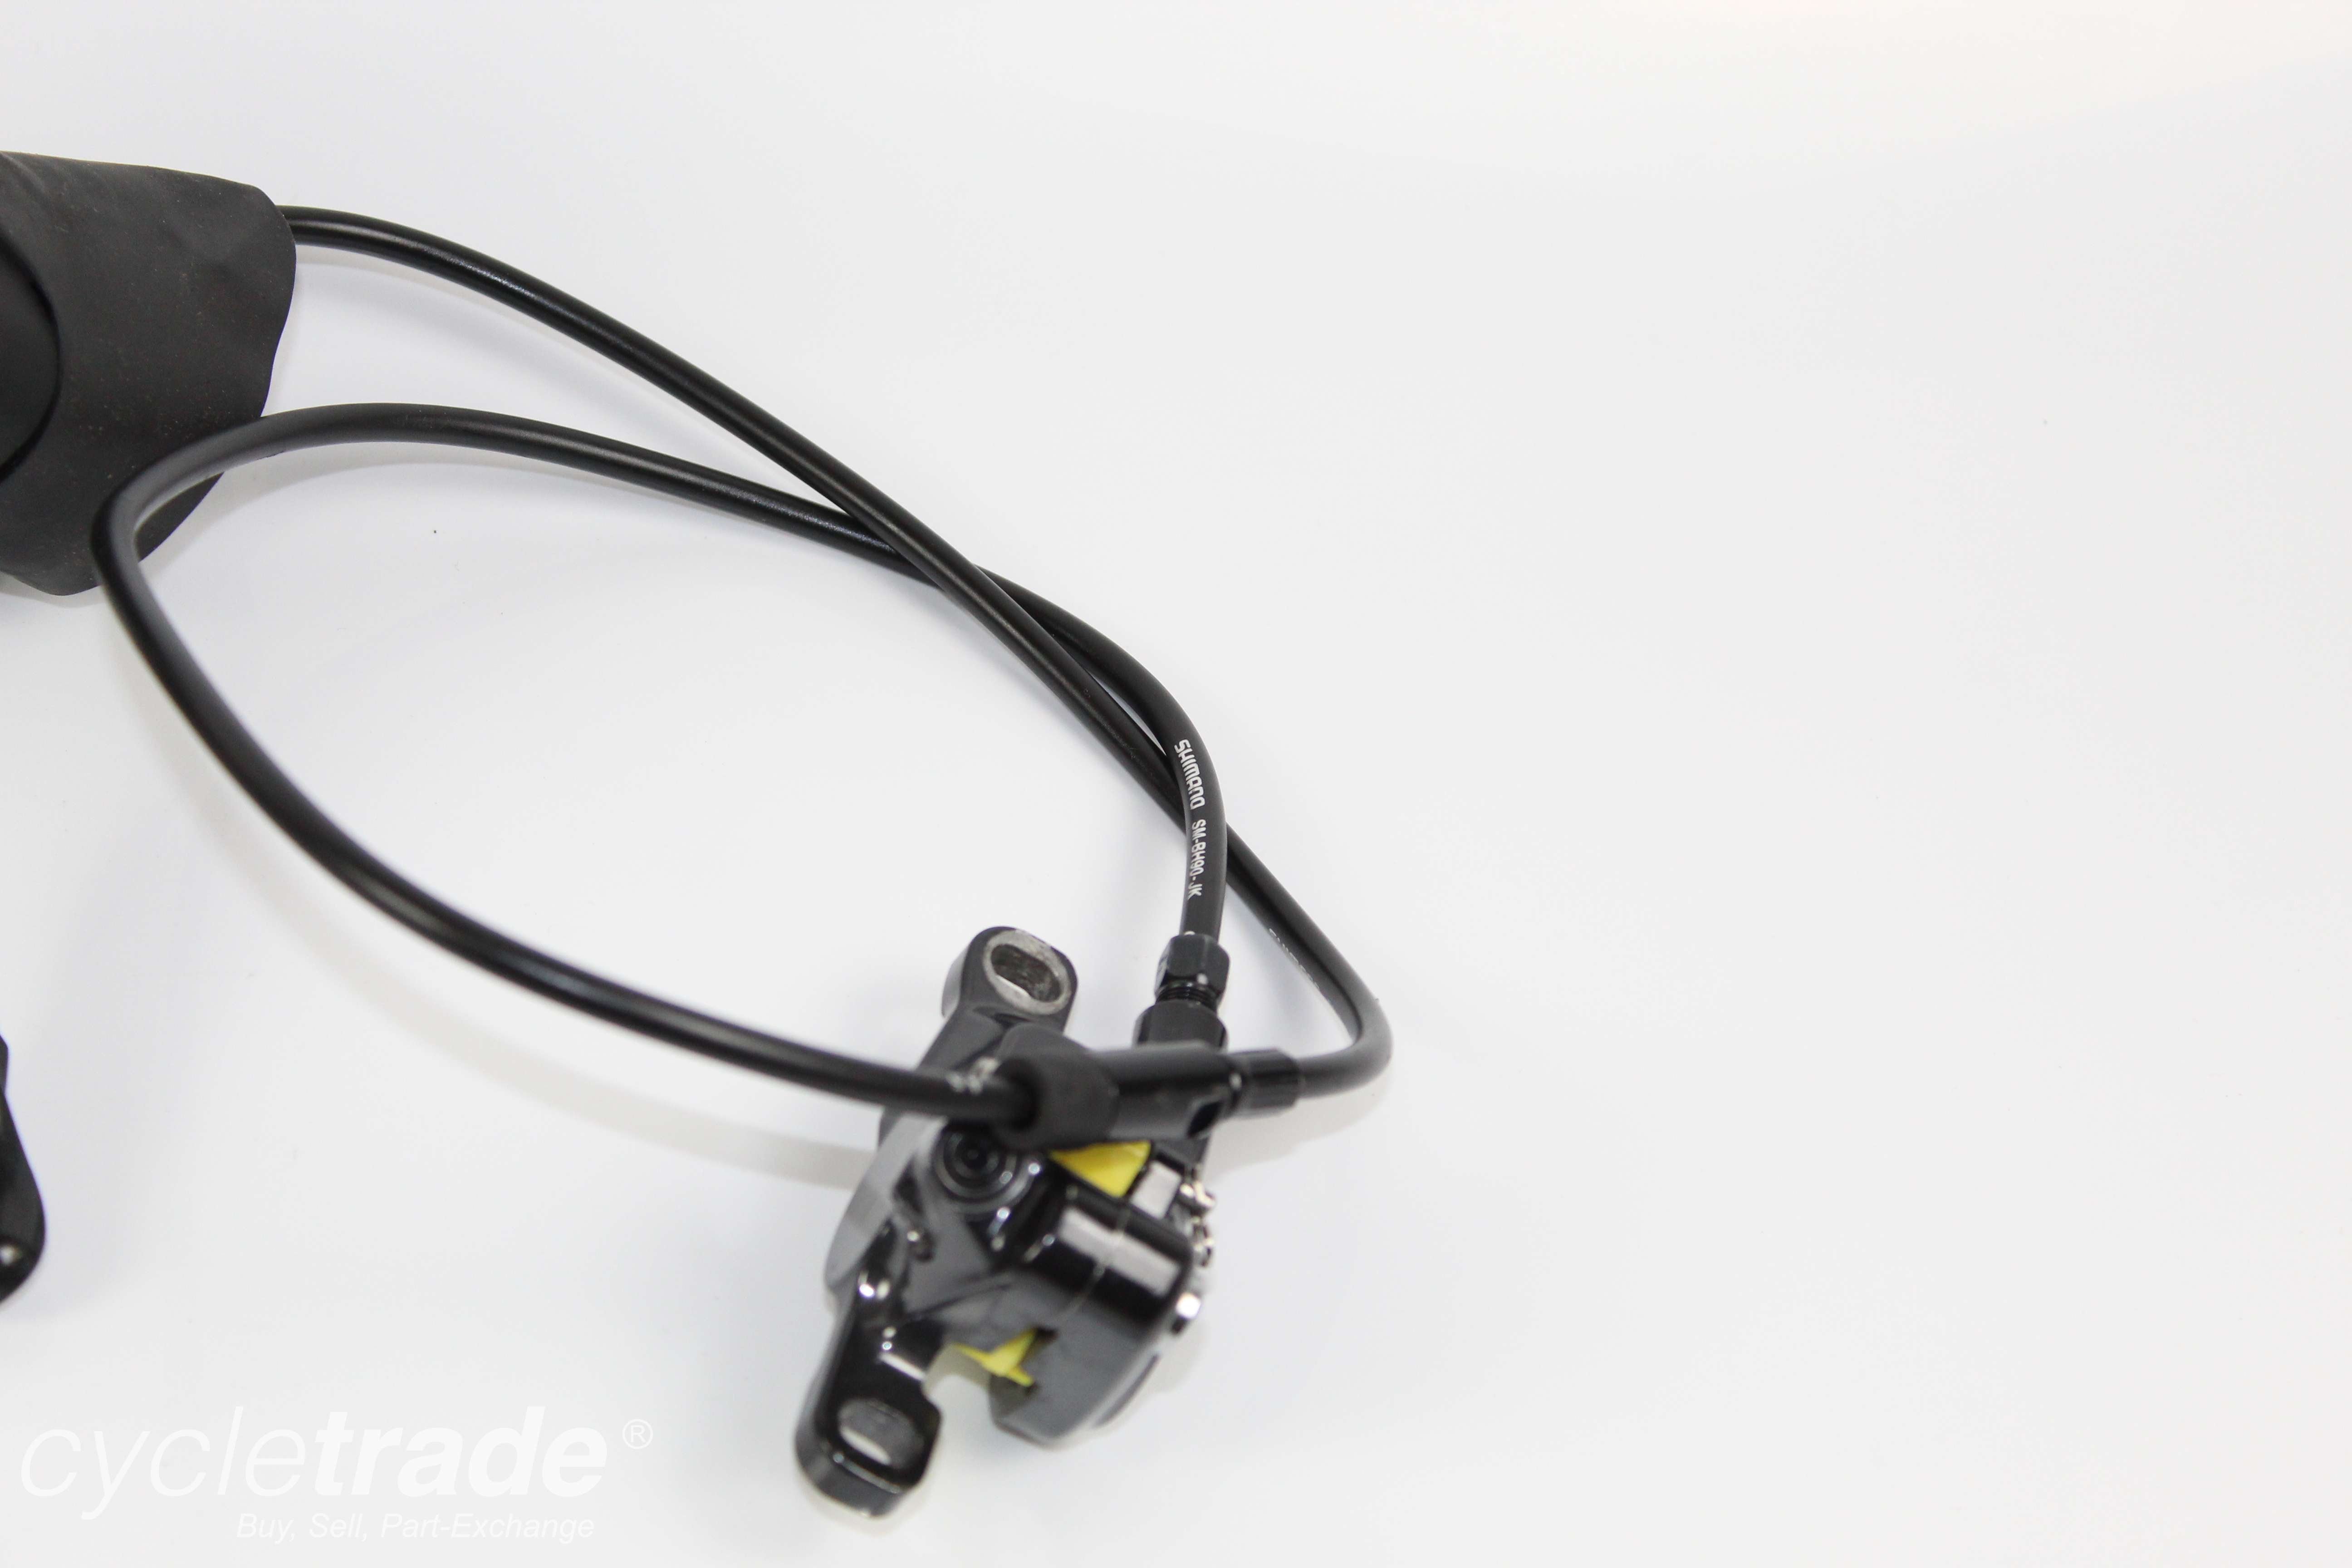 STI Hydraulic Brakeset- Shimano ST/BR-RS685 11x2 Speed- Grade C+